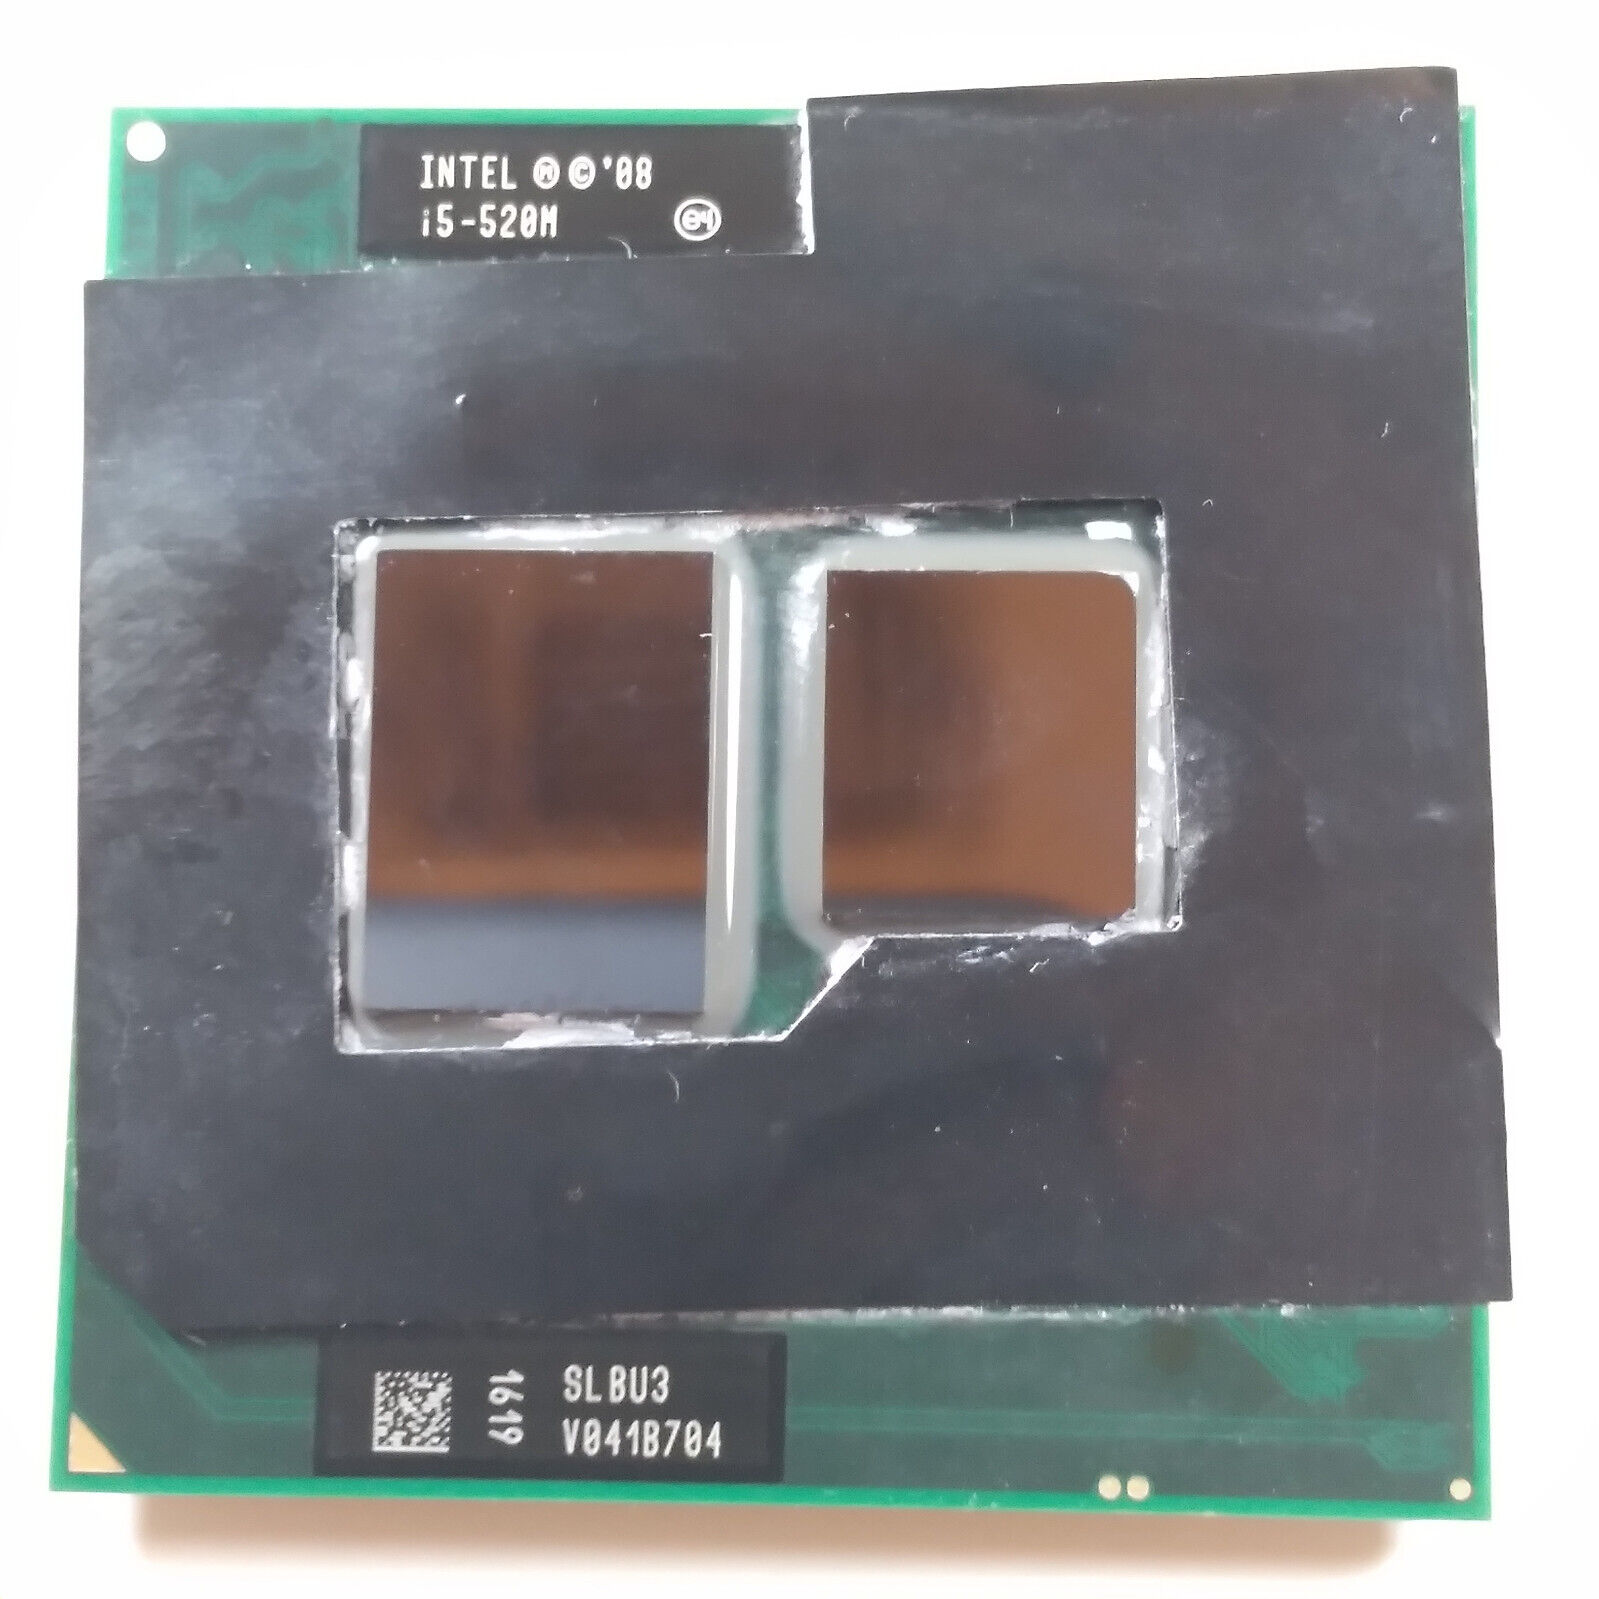 Intel Core i5-520M 2.4GHz 2.5 GT/s Socket G1 Laptop CPU - SLBNB